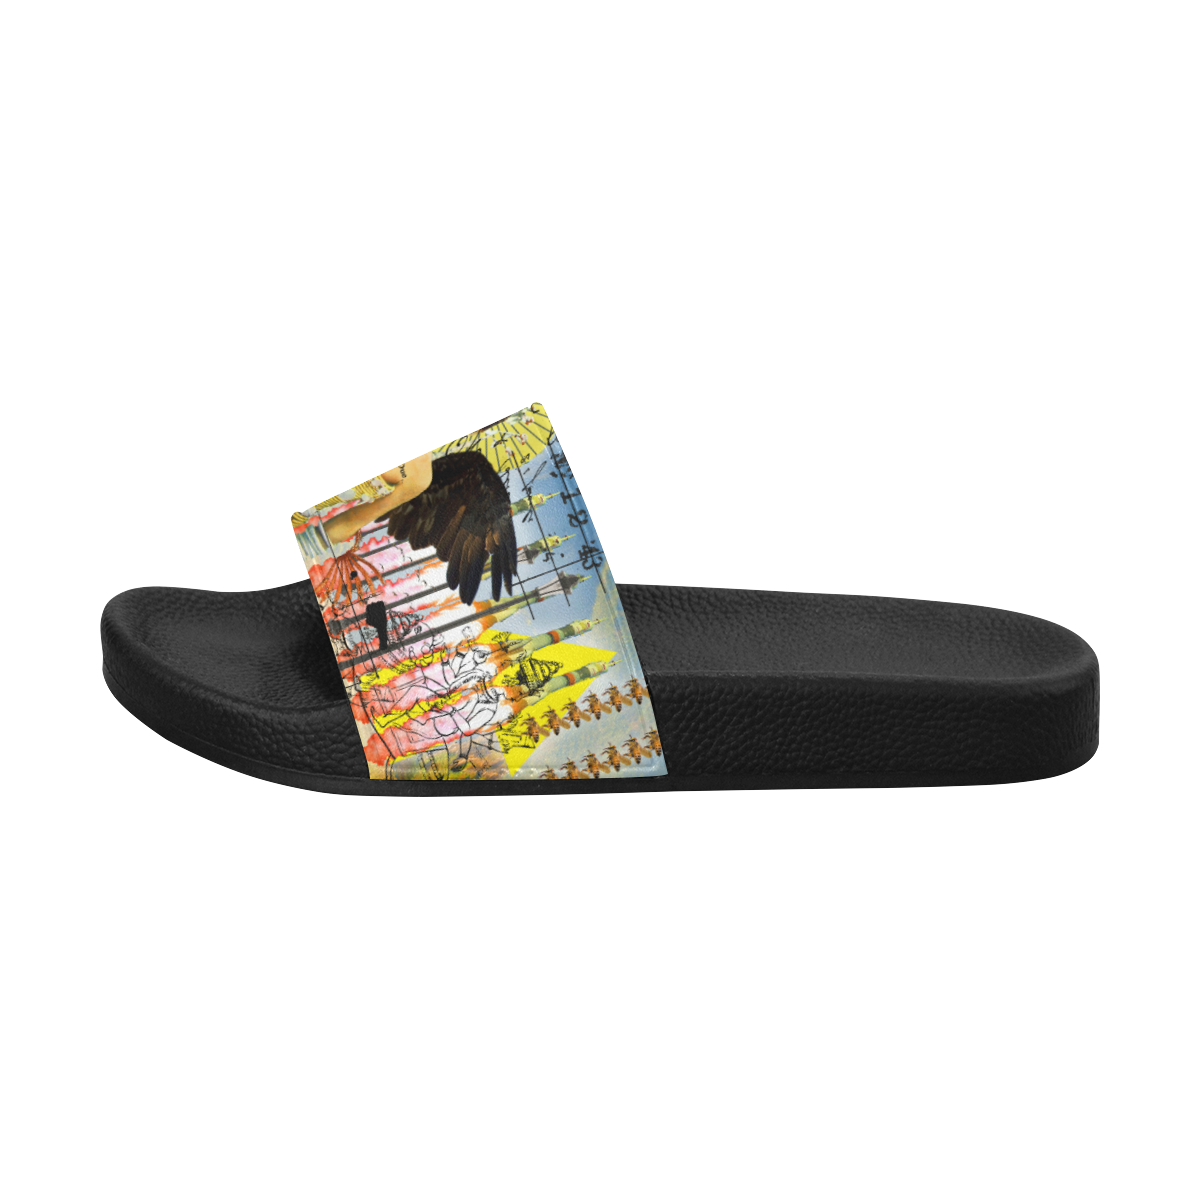 ROCKET GIRL II Men's Slide Sandals (Model 057)